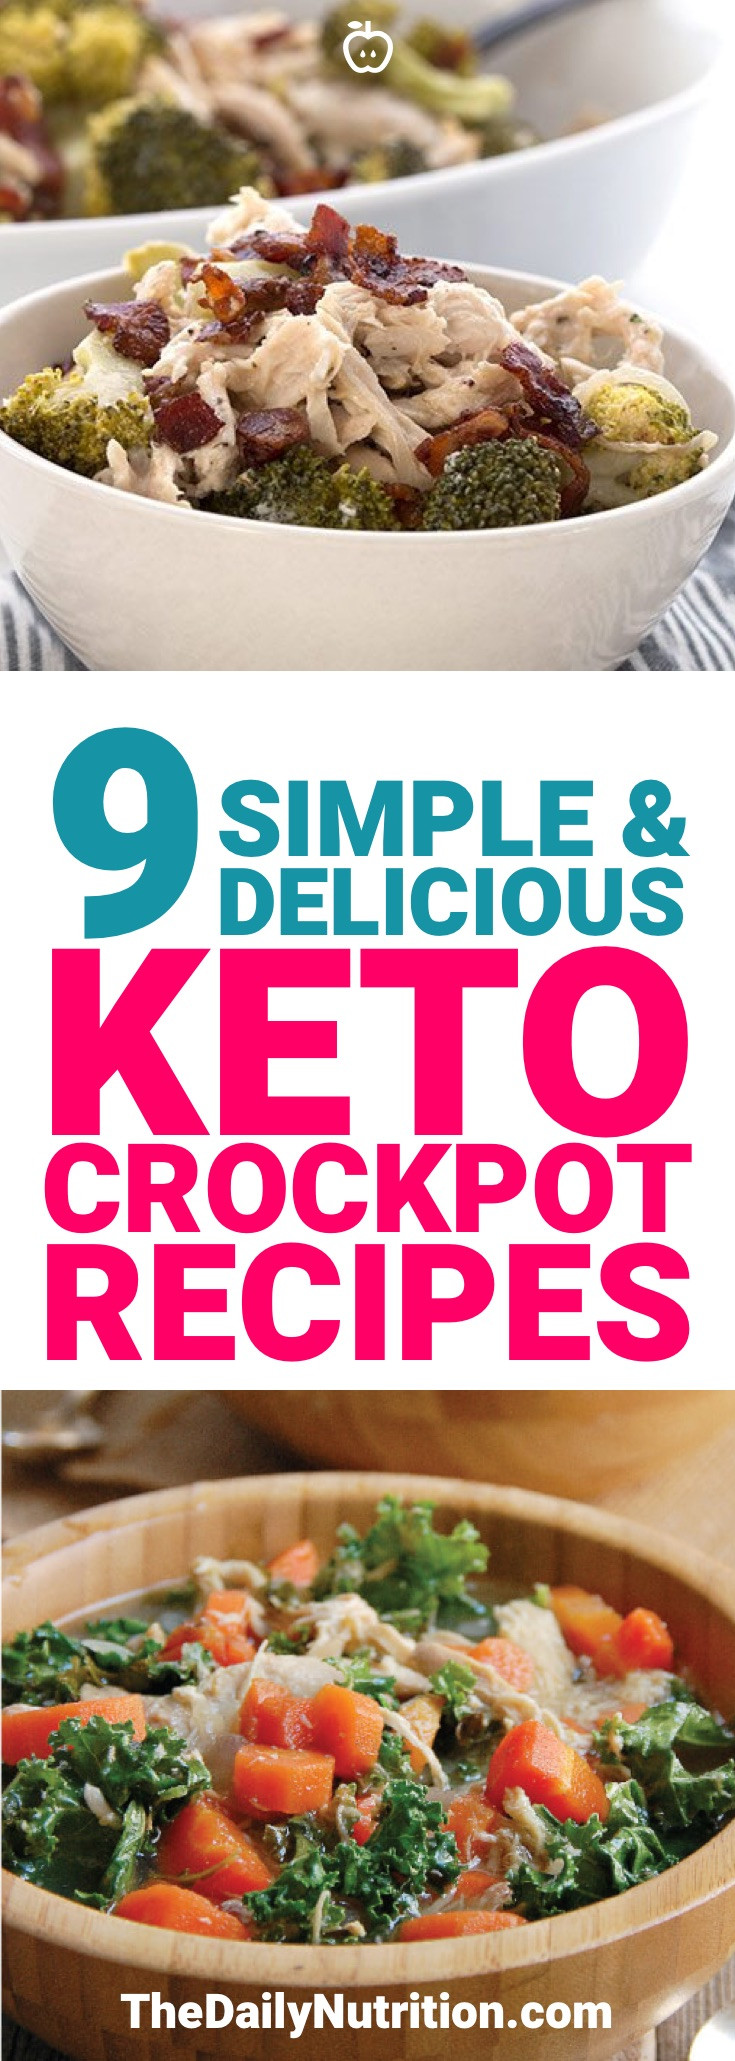 Keto Diet Recipes Dinners Crock Pot
 9 Delicious & Simple Keto Crockpot Recipes to Make Tonight